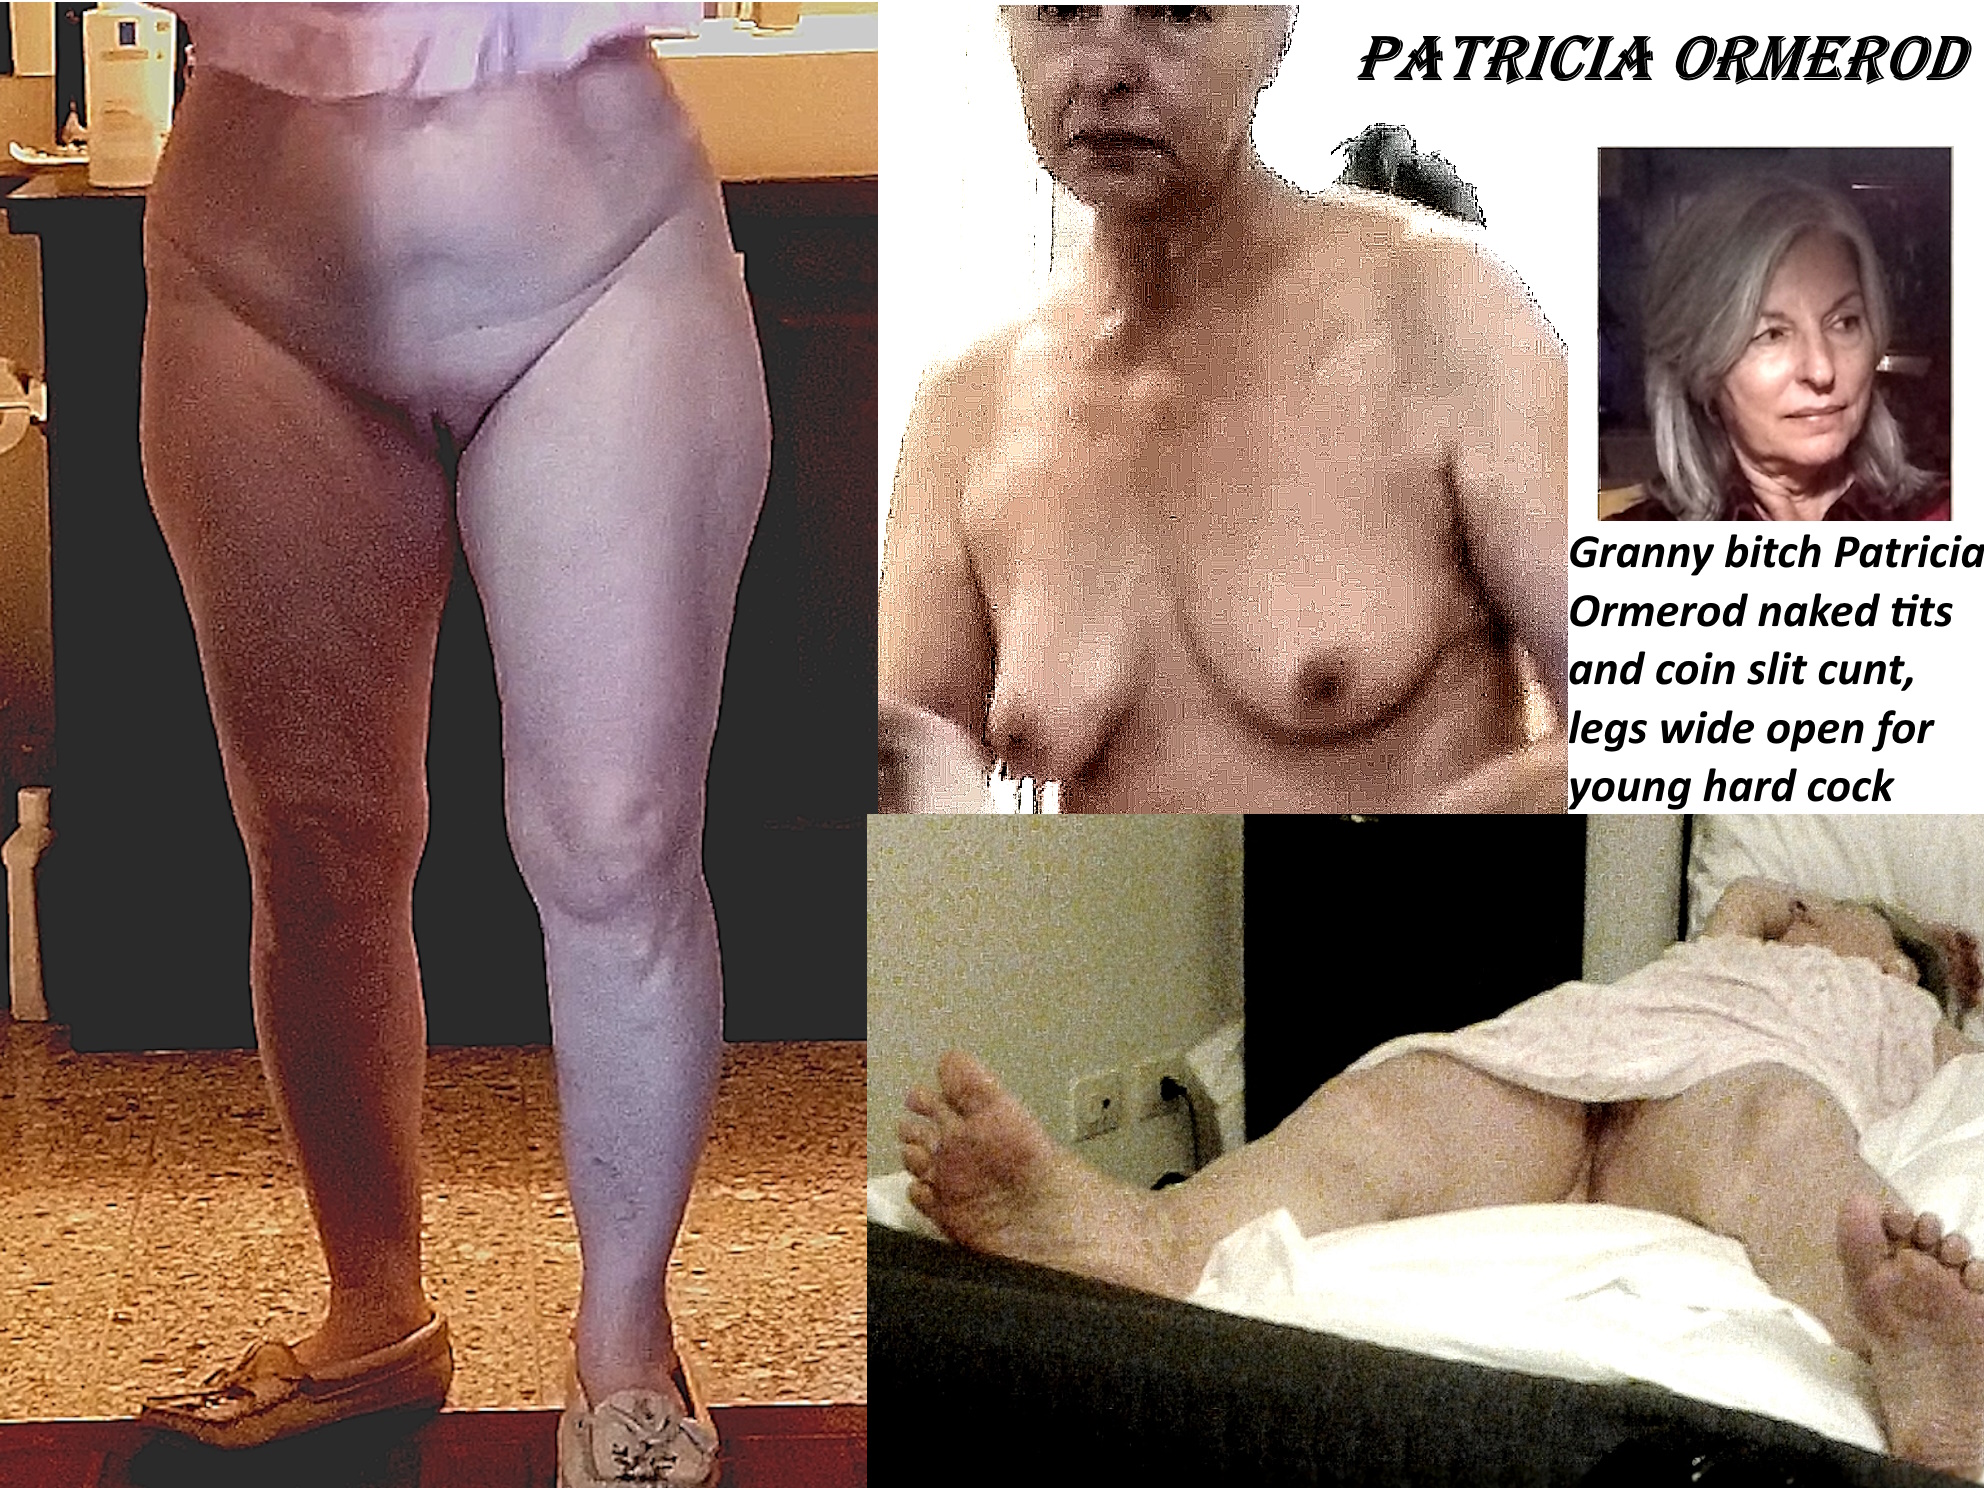 Patricia Ormerod granny slut shows coin-slit cunt, tits, legs wide open